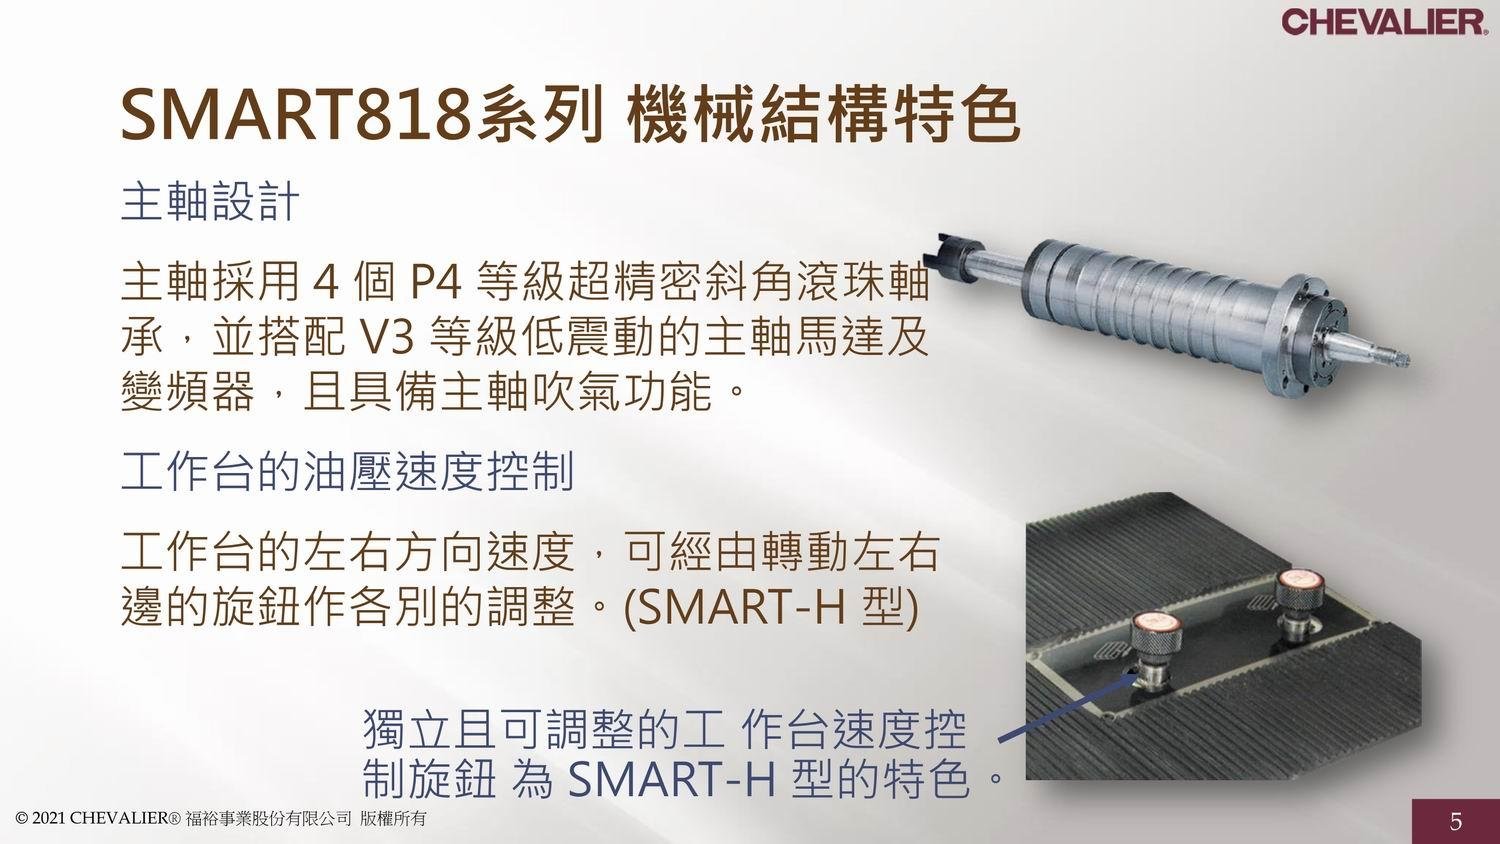 SMART-B818III 新能源產業 超聲波焊接頭-臺灣福裕 CHEVALIER 2